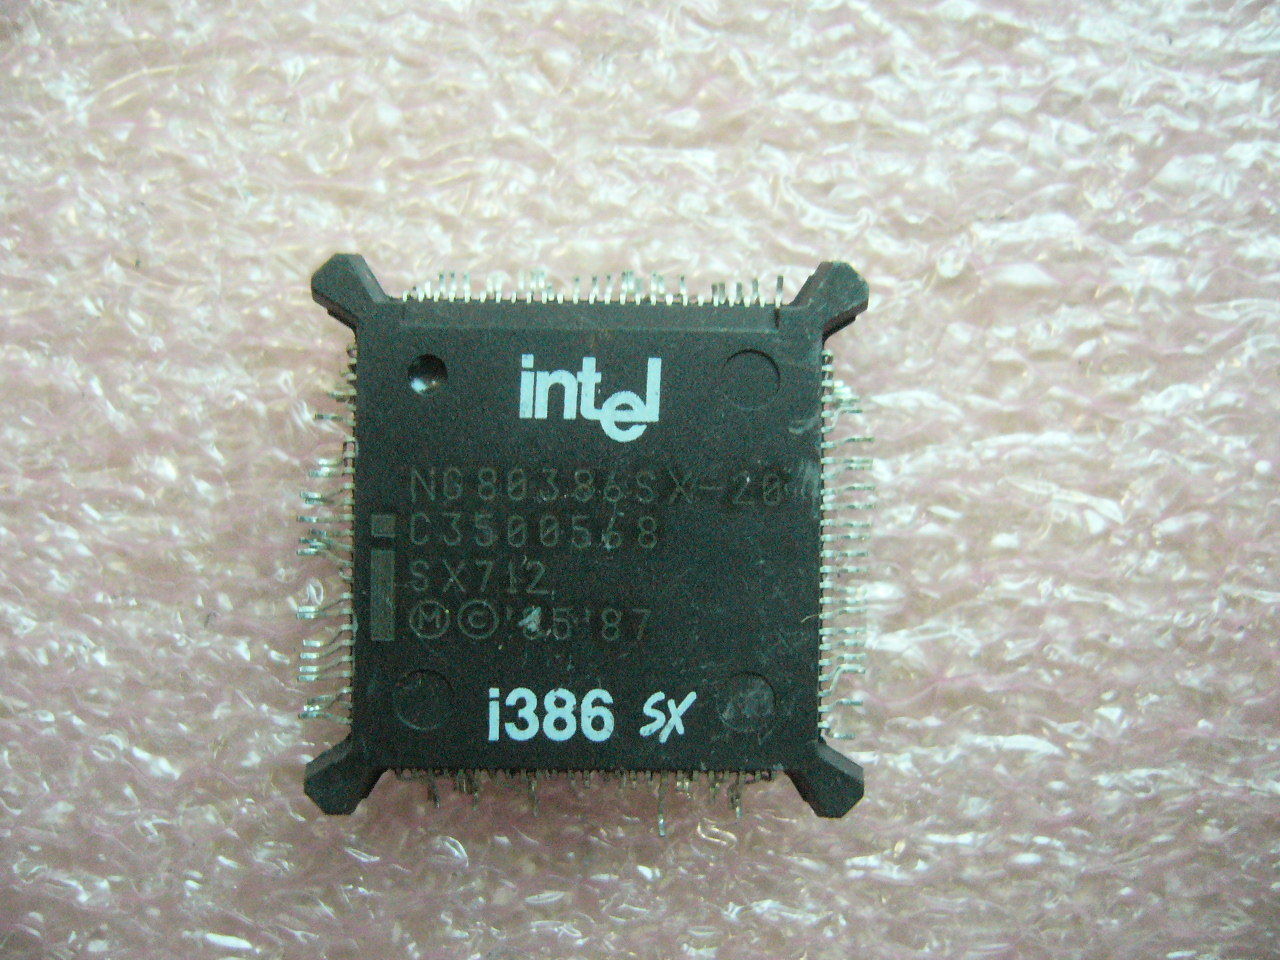 QTY 1x Vintage CPU Intel NG80386SX-20 SX712 i386 SX - Click Image to Close